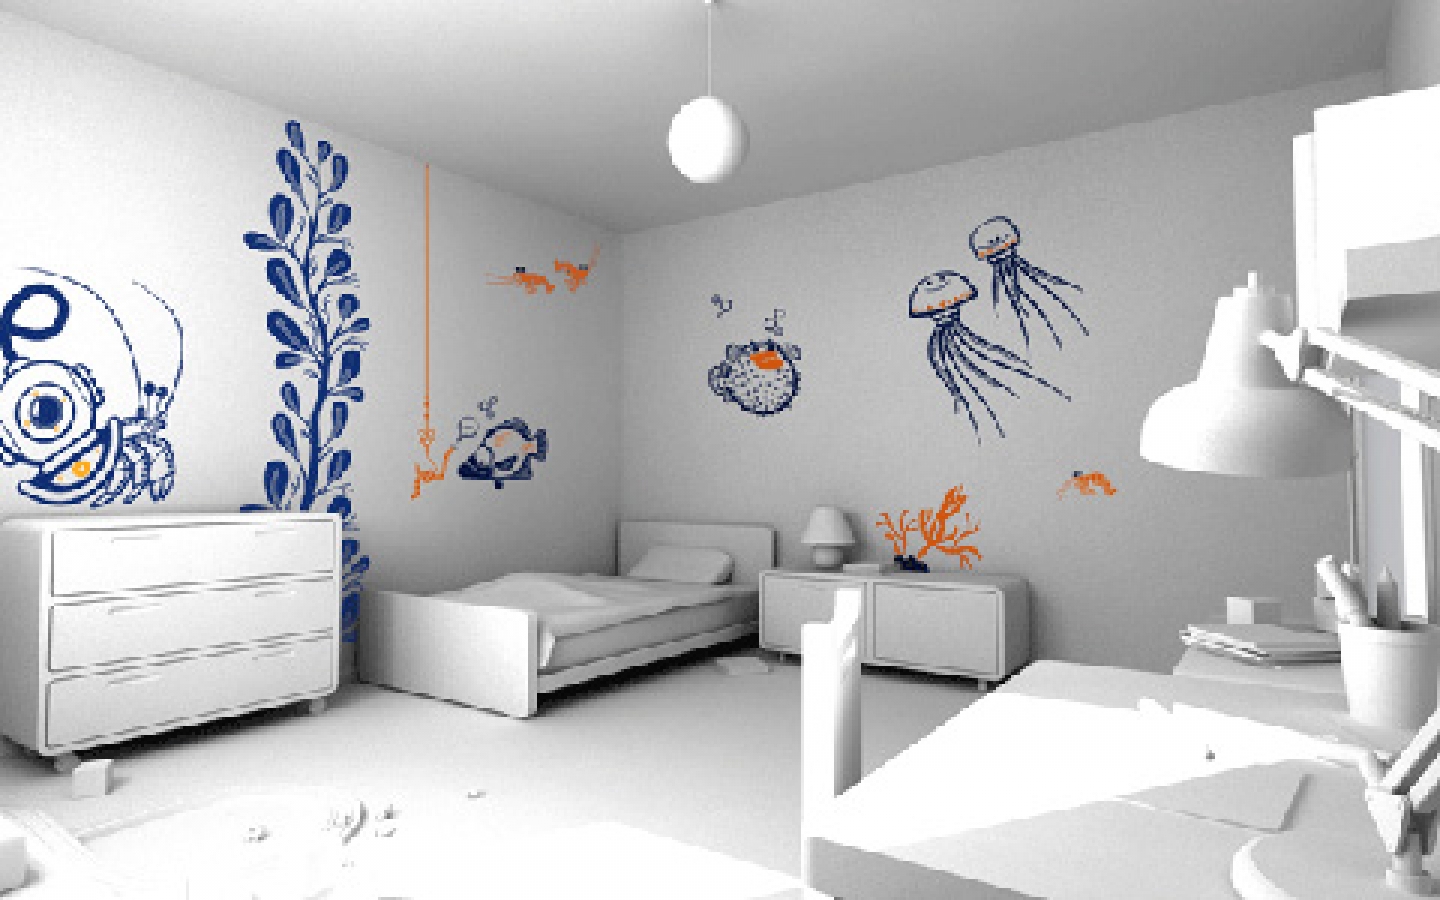  Wallpaper TV Wall Ideas   Home Design Ideas Interior Design Ideas